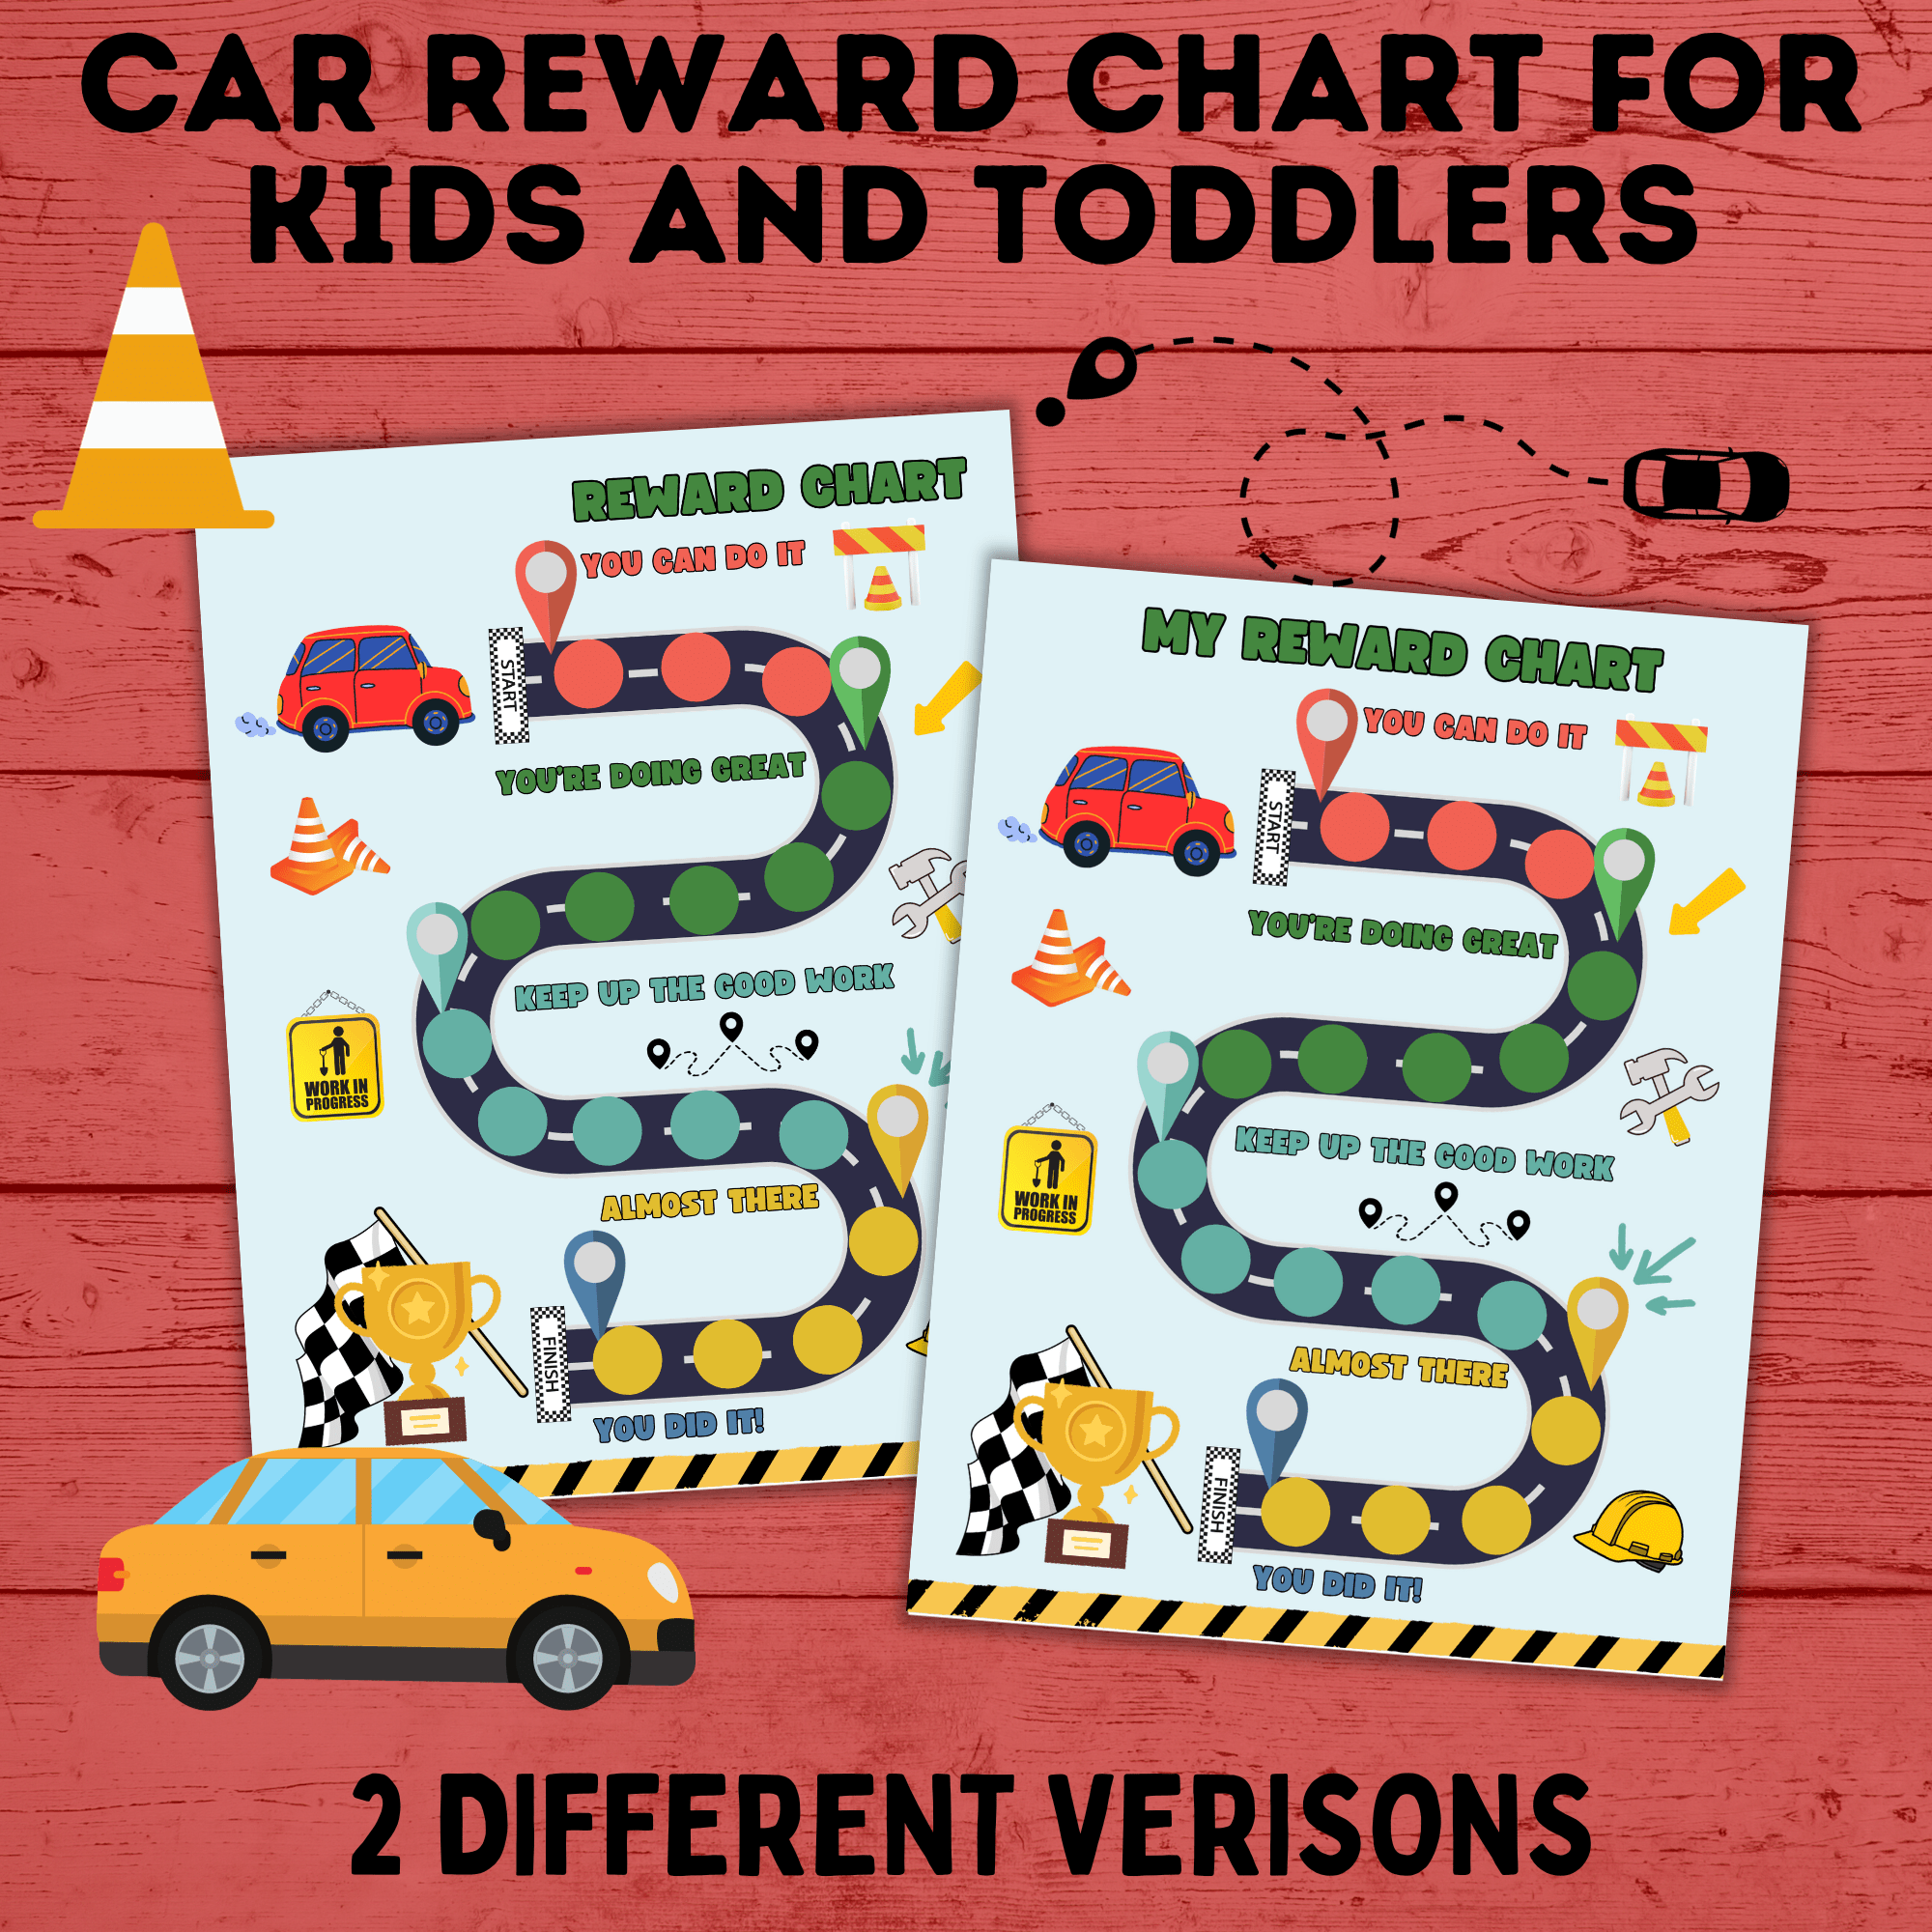 Car reward chart for kids and toddlers mockup image.